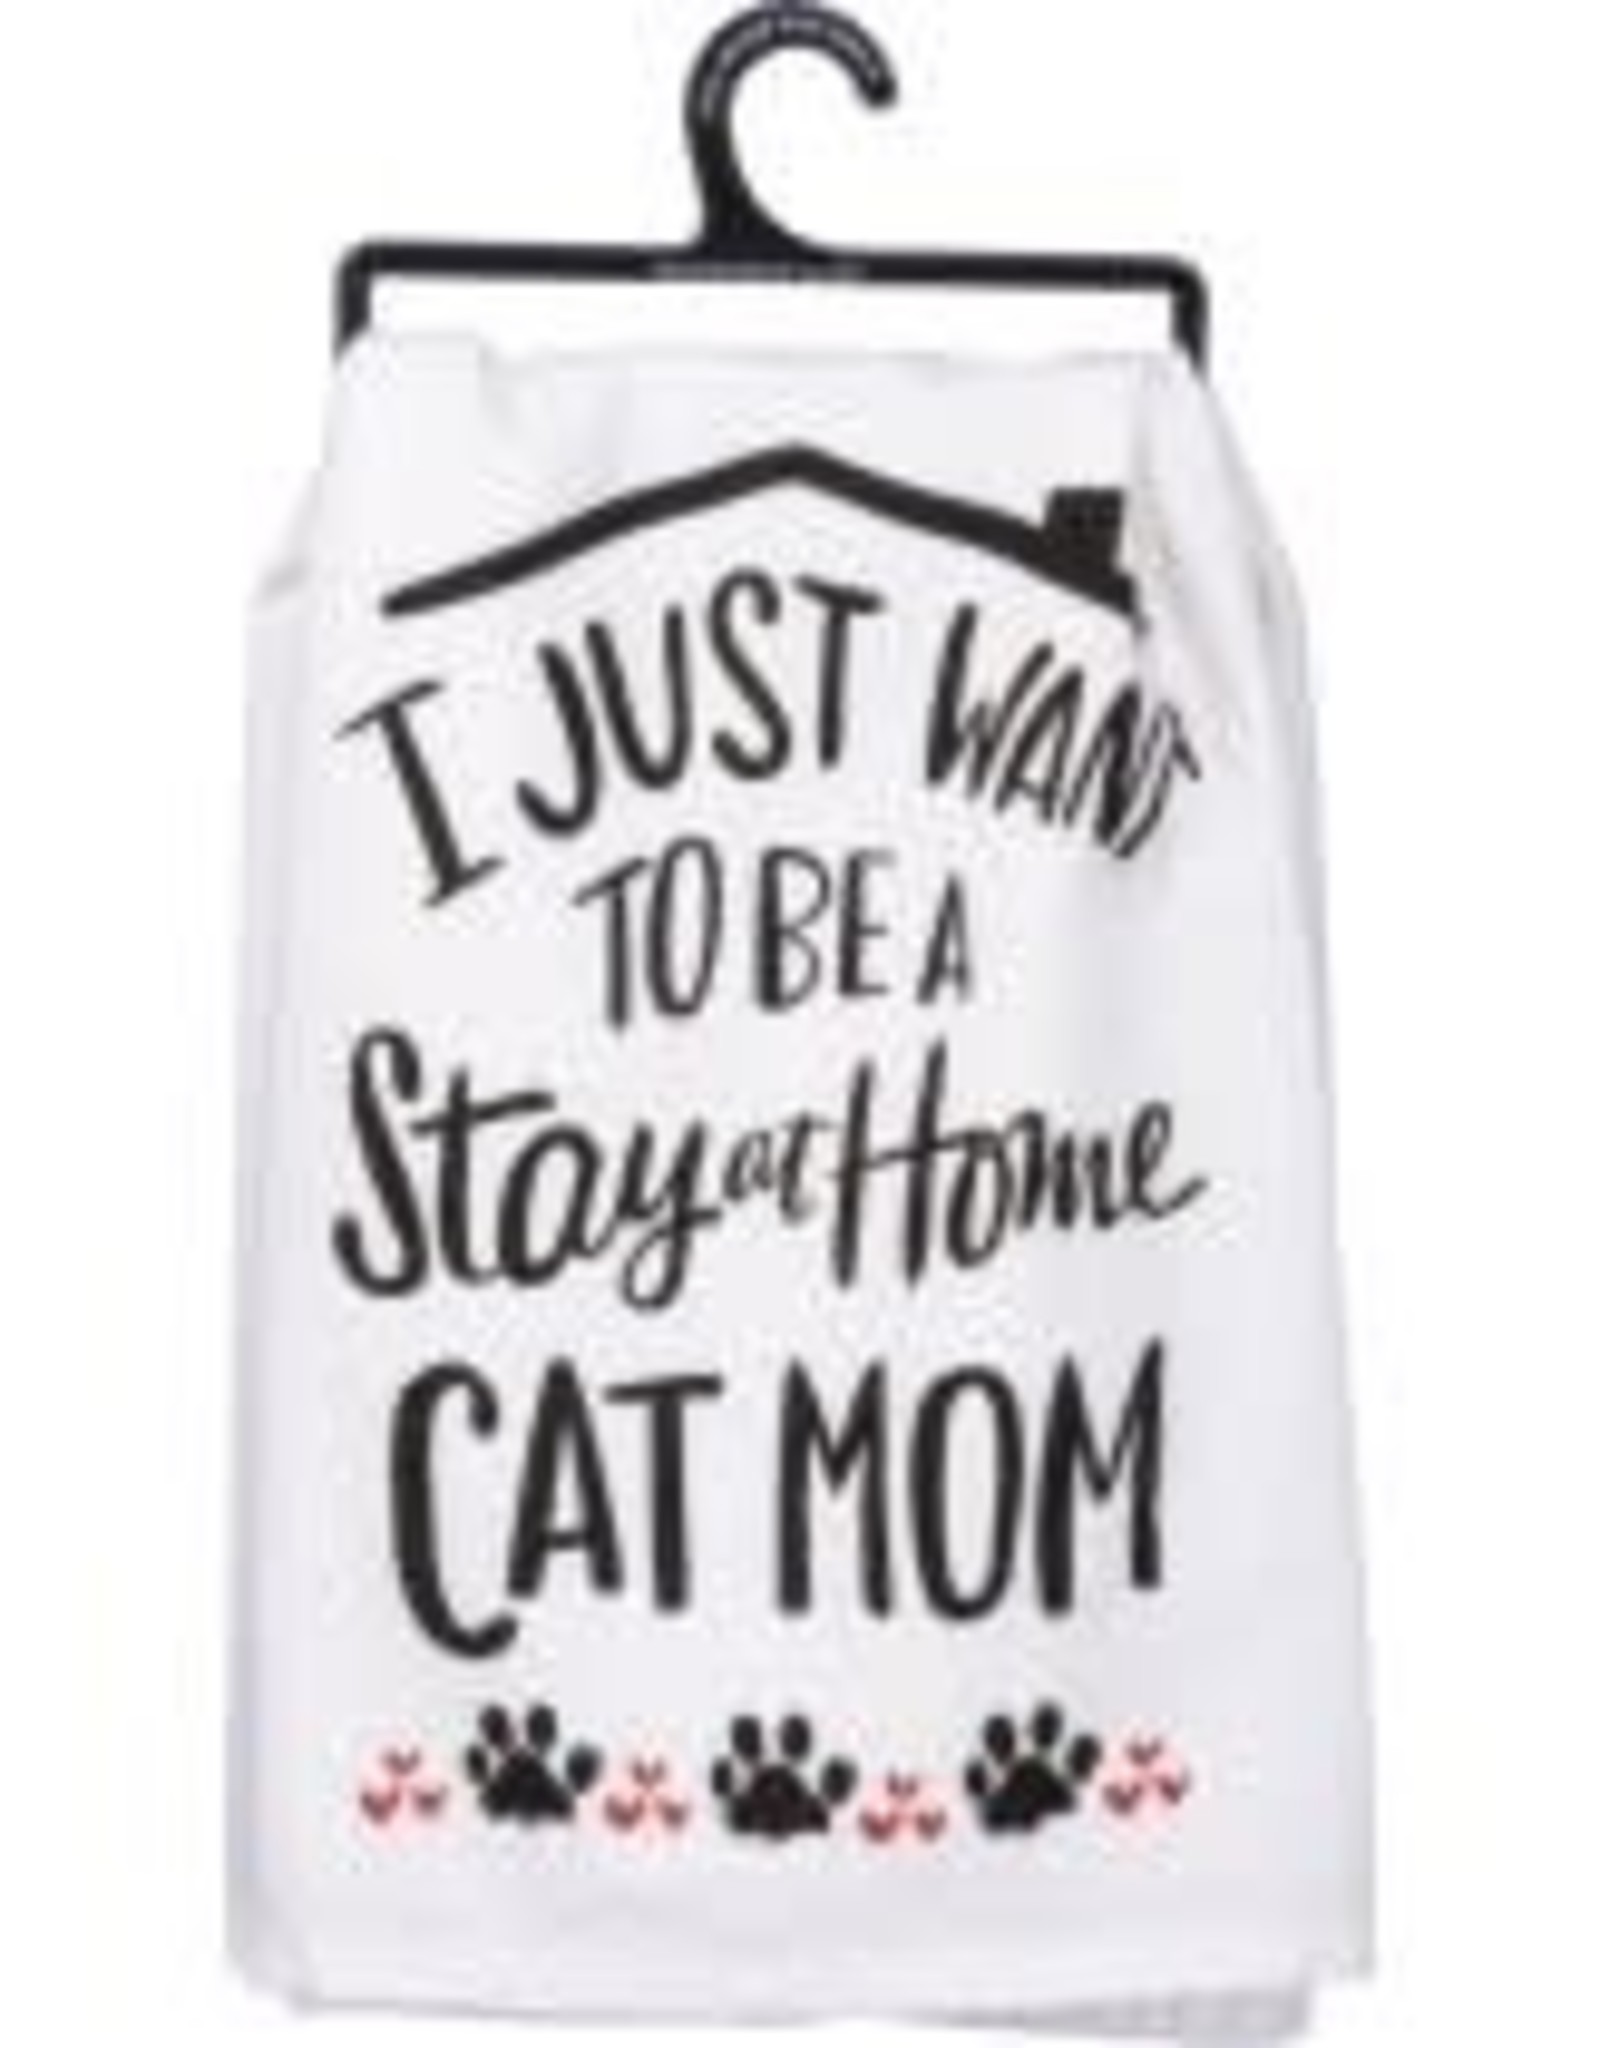 Dish towel - Cat Mom